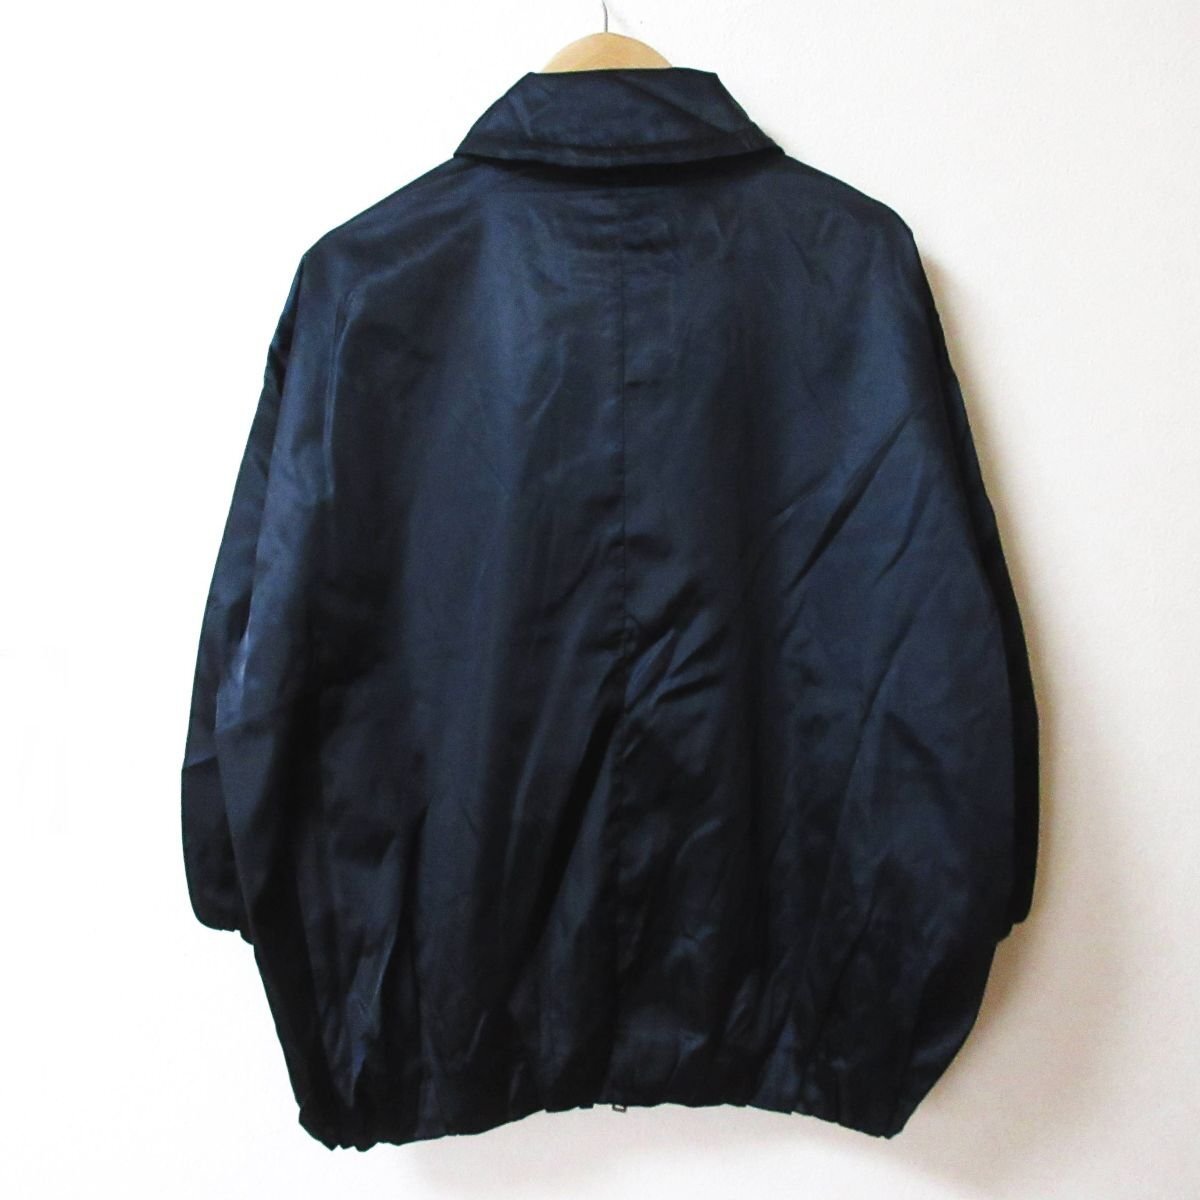  beautiful goods PRADA SPORT Prada sport Zip up nylon jacket blouson size 40 navy *